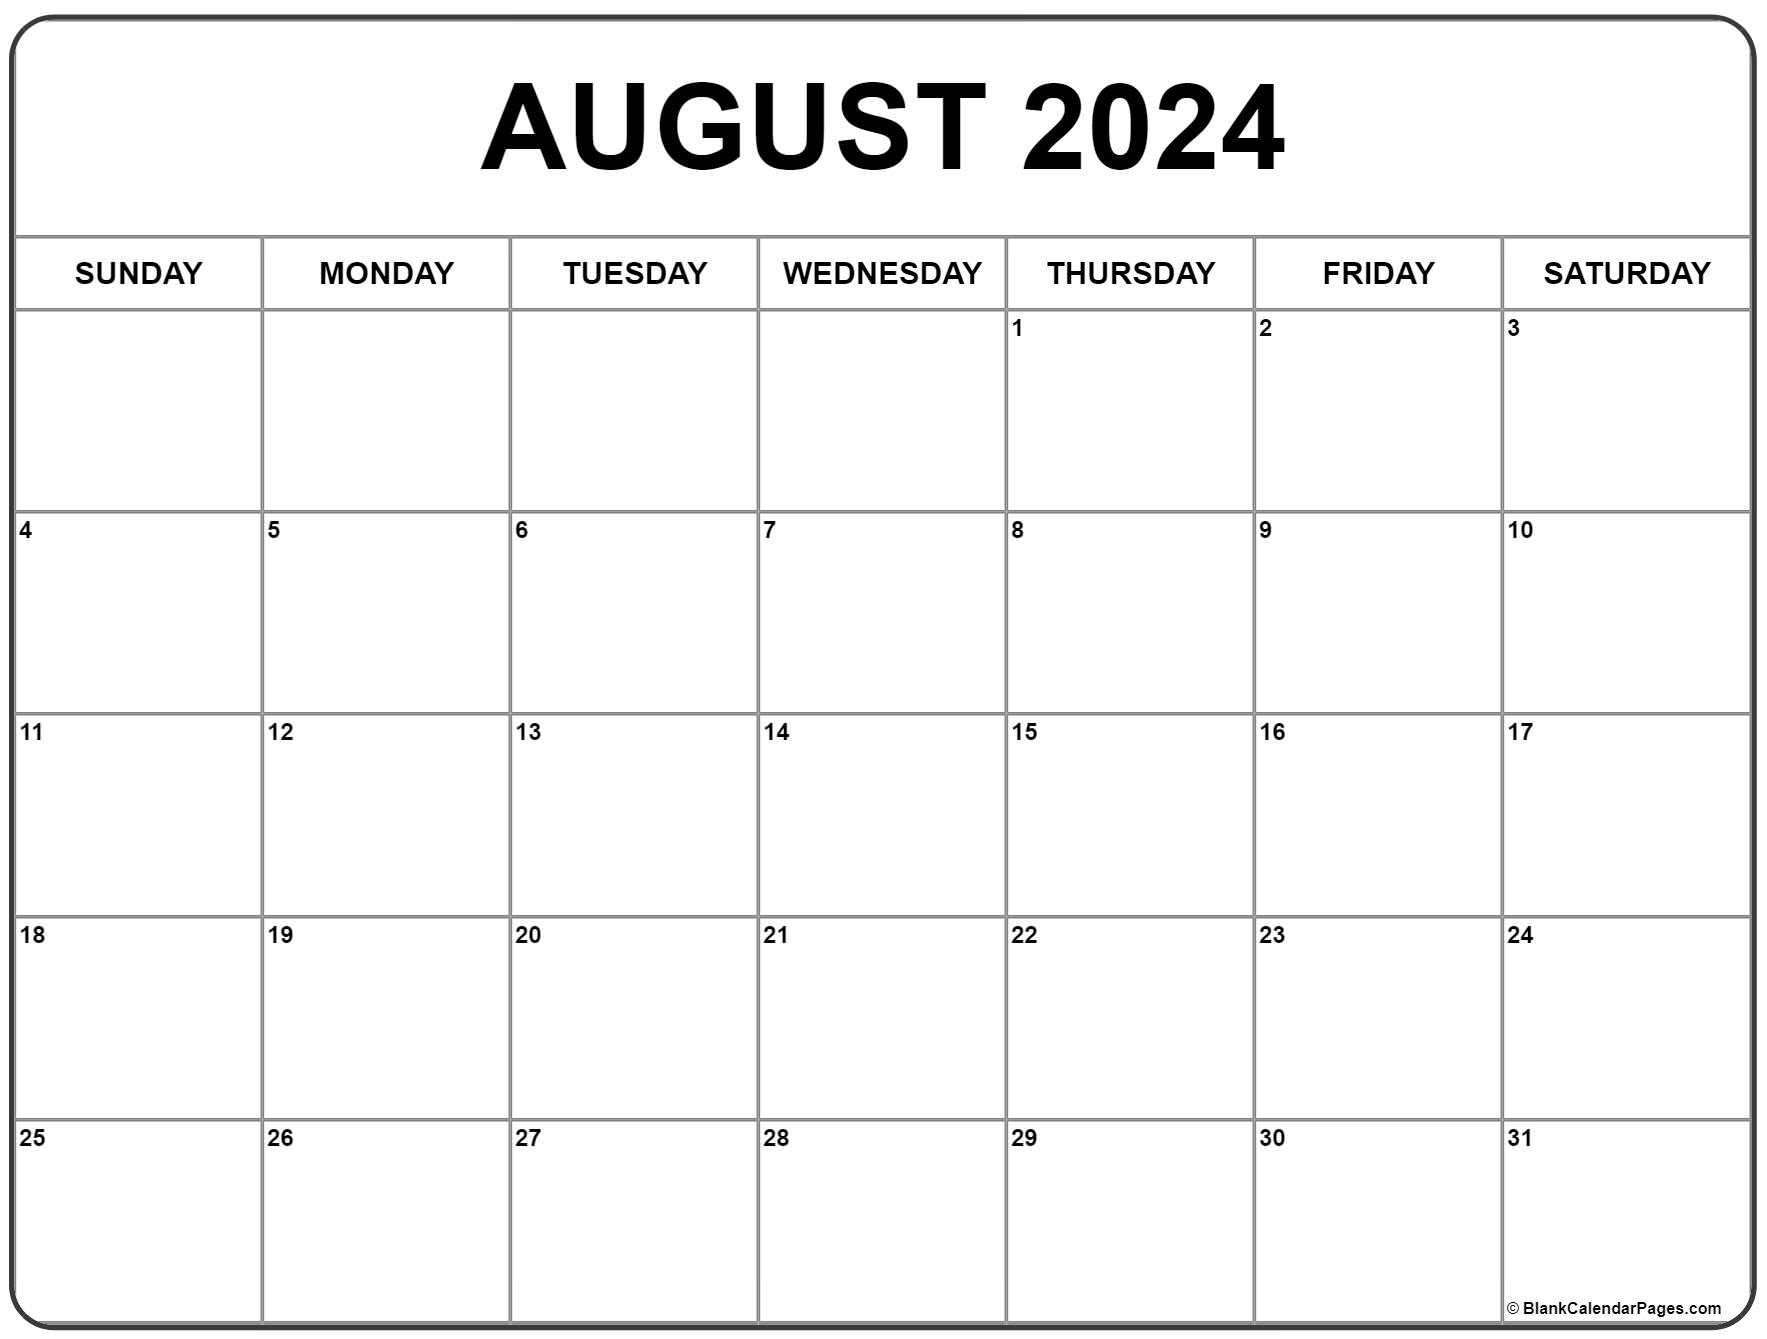 August 2024 Calendar | Free Printable Calendar for 2024 August Printable Calendar